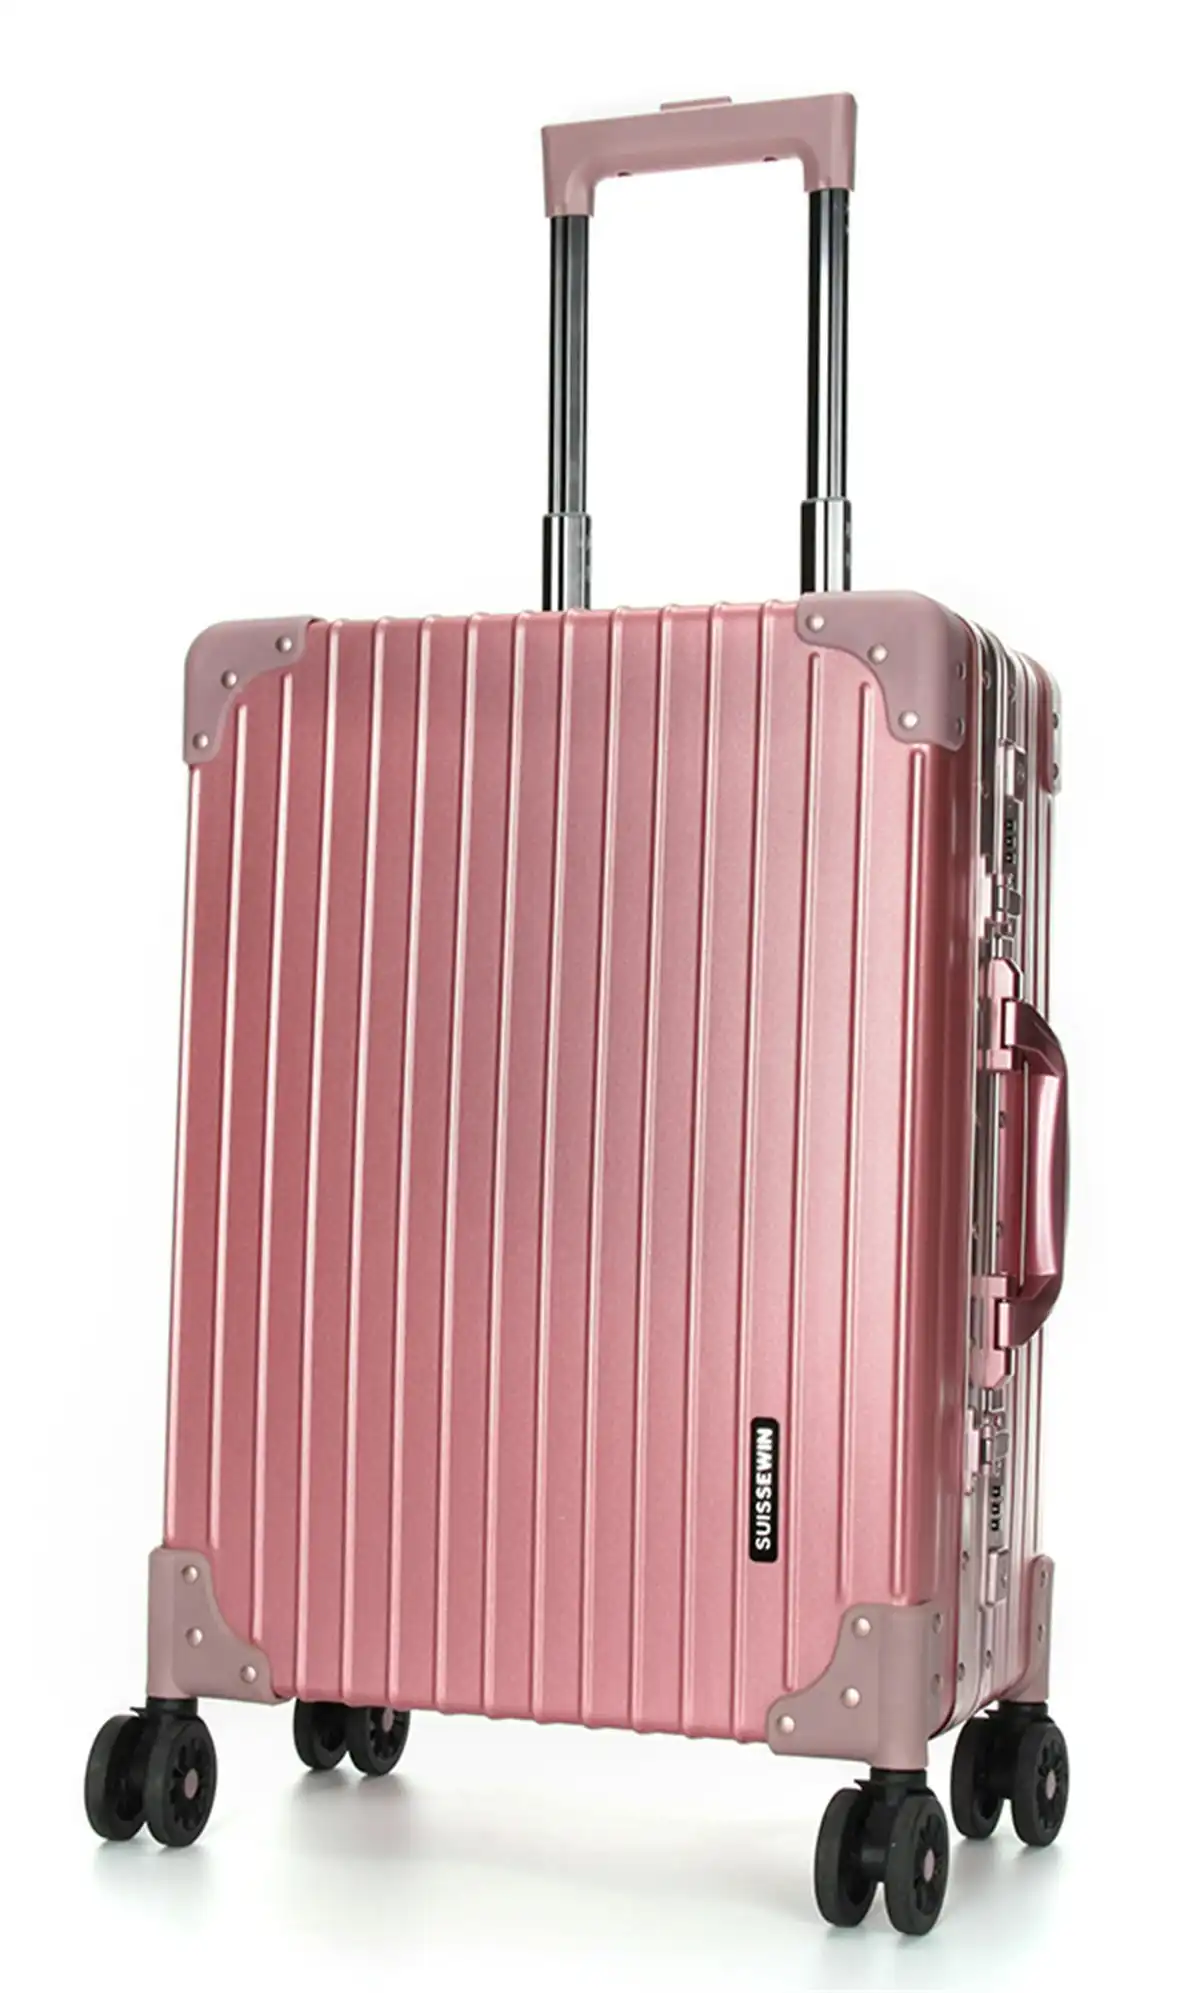 Suissewin Swiss Aluminium Luggage Suitcase Lightweight TSA Locker 8 Wheels Check in Large Hardcase SN7711B Rose Gold